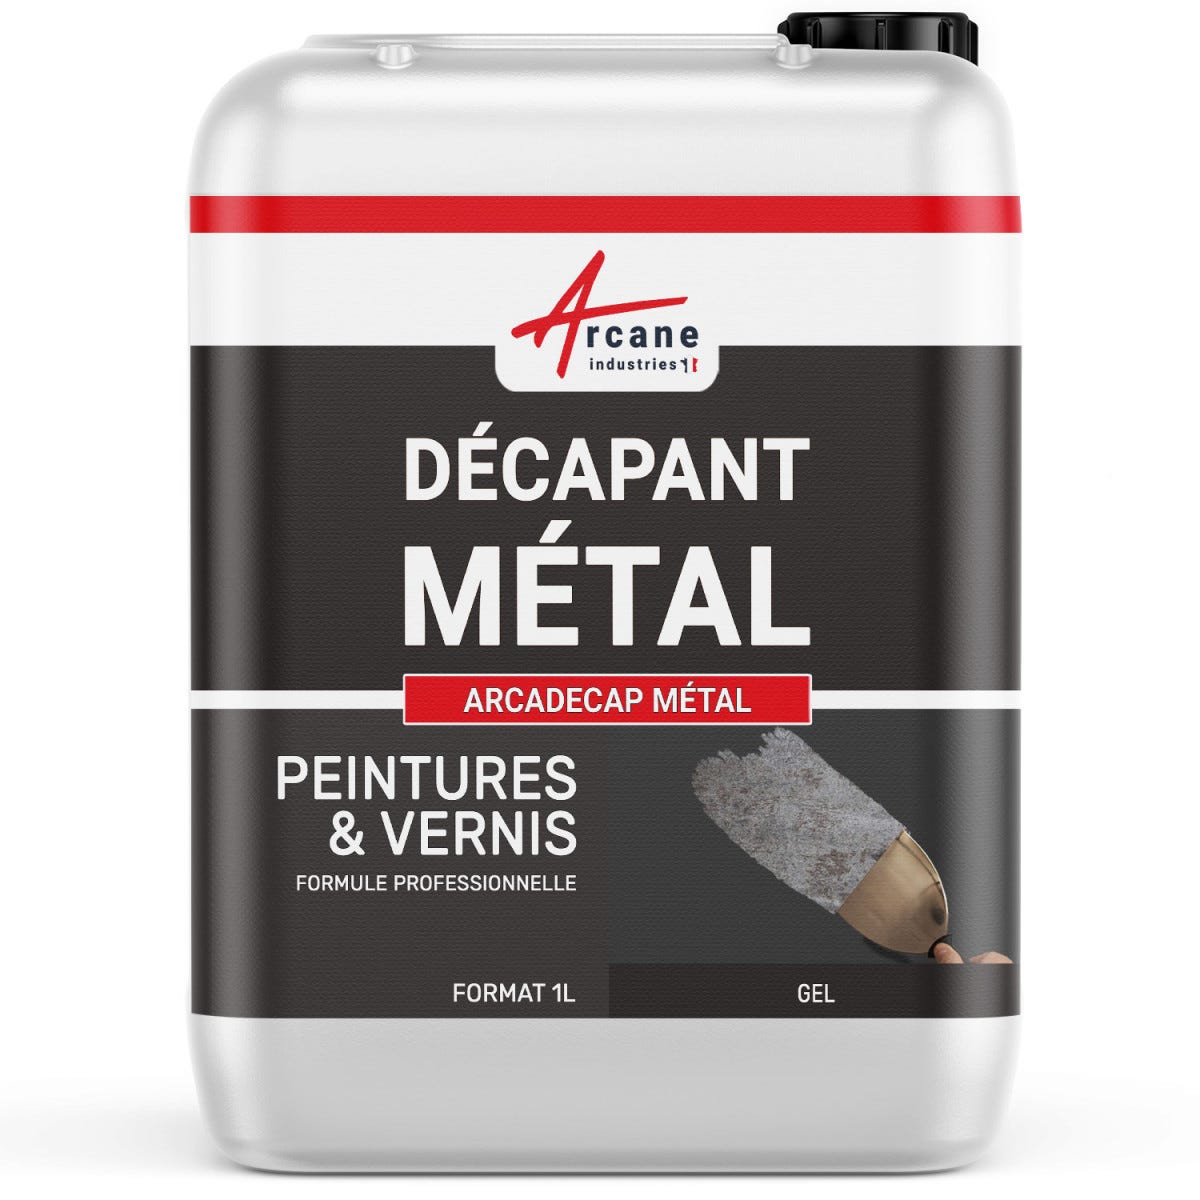 Decapante para pintura metálica - ARCADECAP METAL-1 L -ARCANE INDUSTRIES